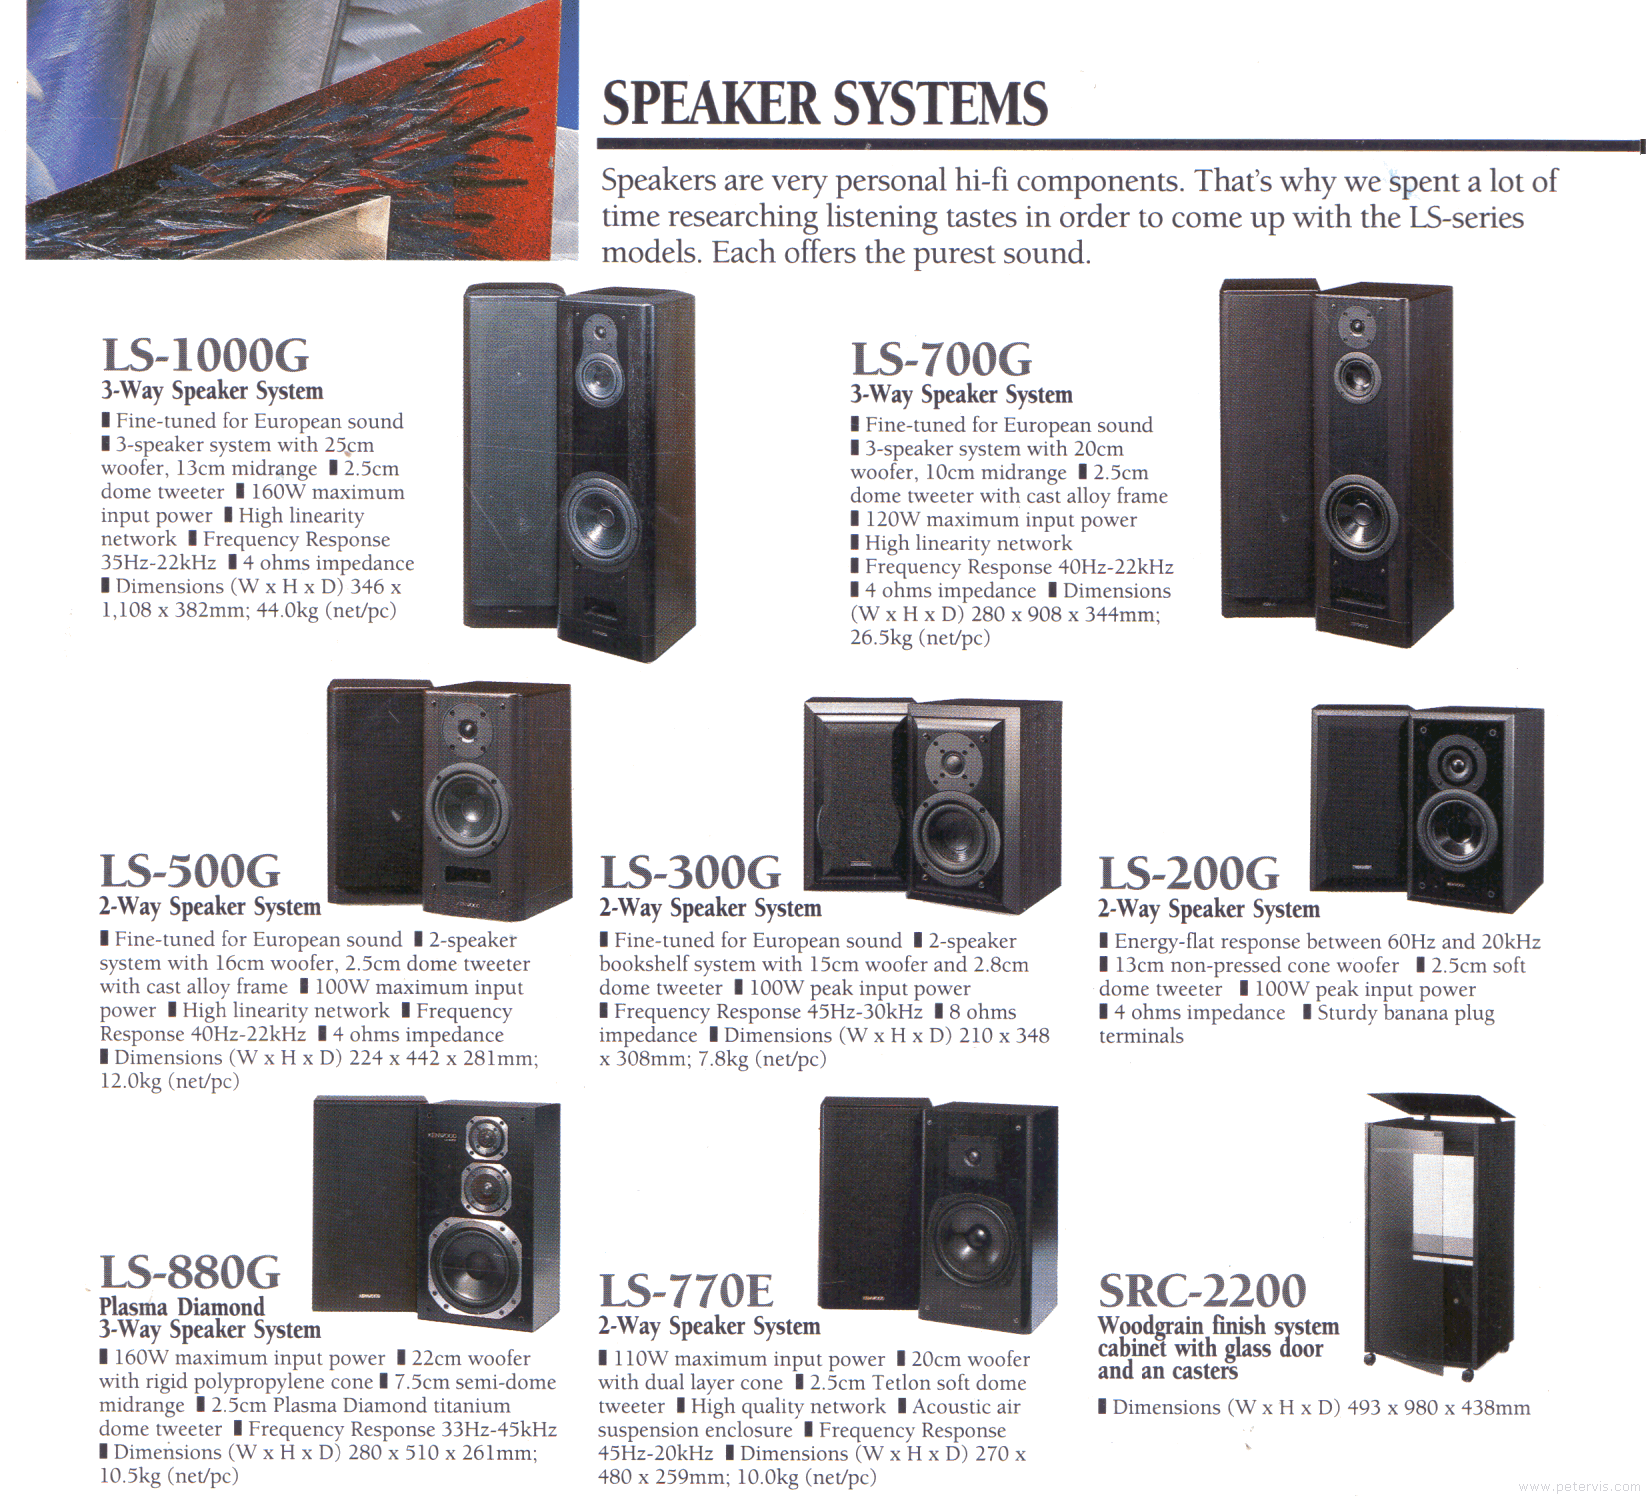 kenwood hifi speakers